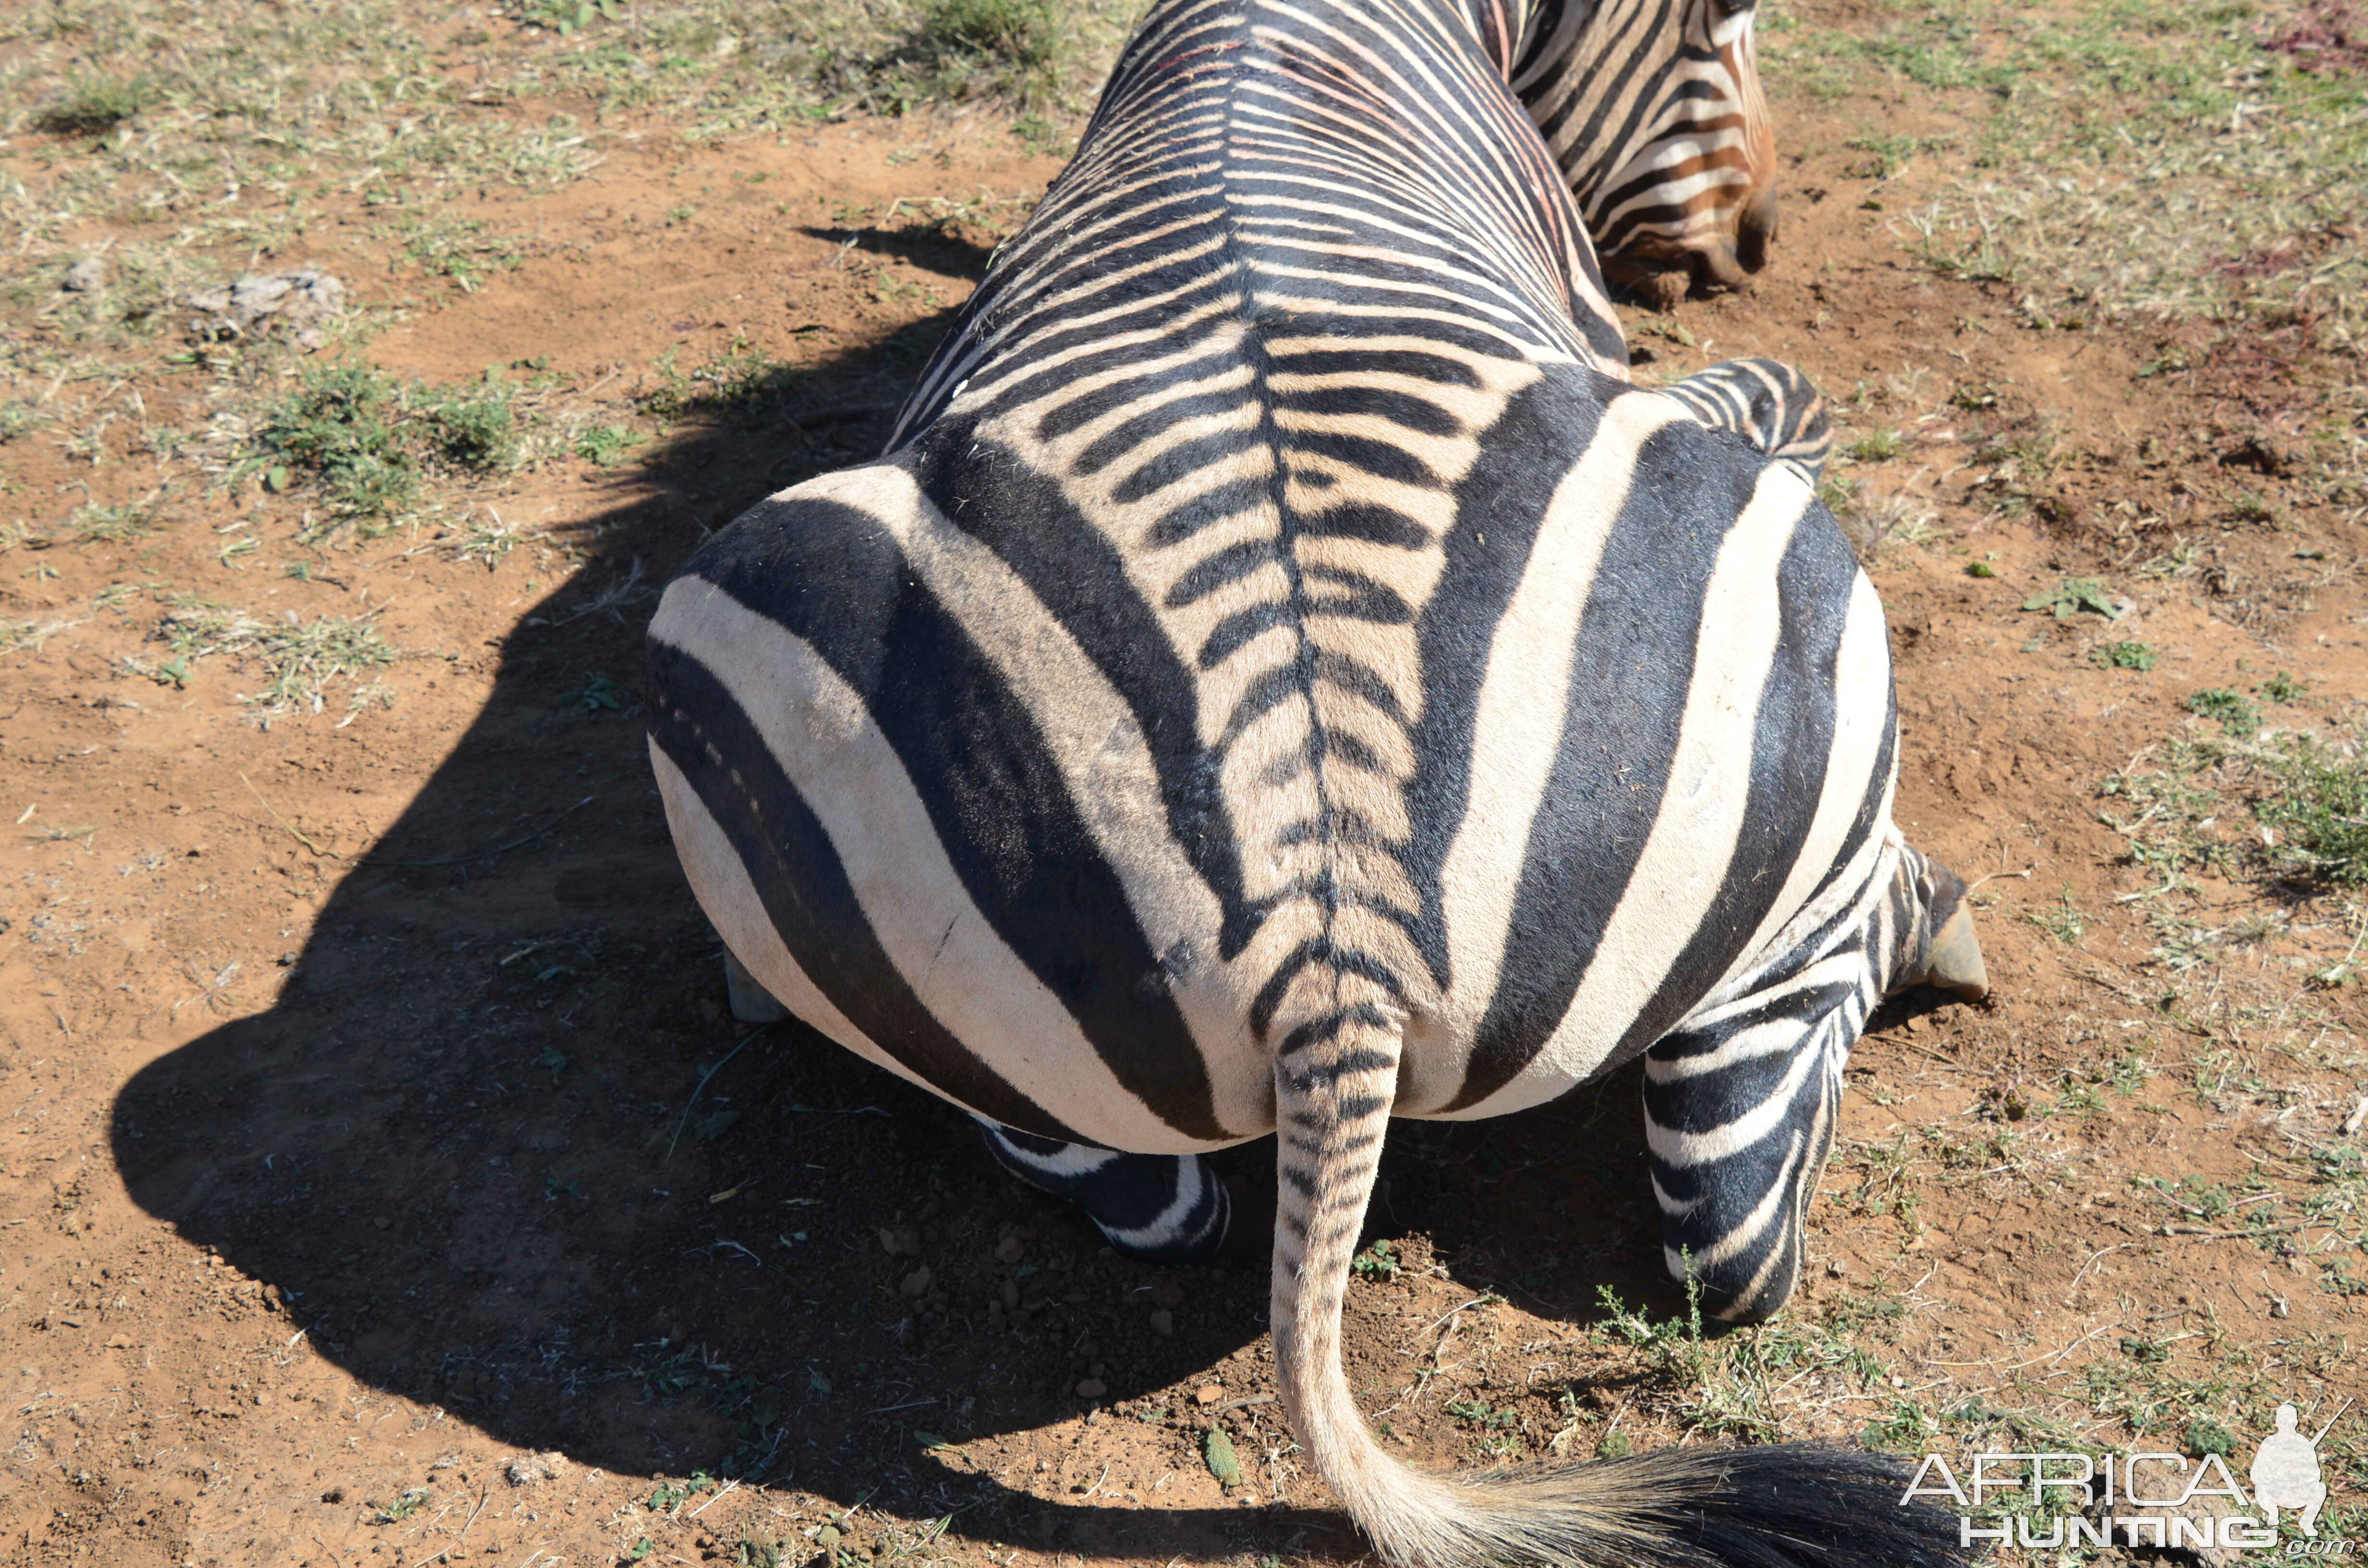 South Africa Hunting Hartmann's Mountain Zebra